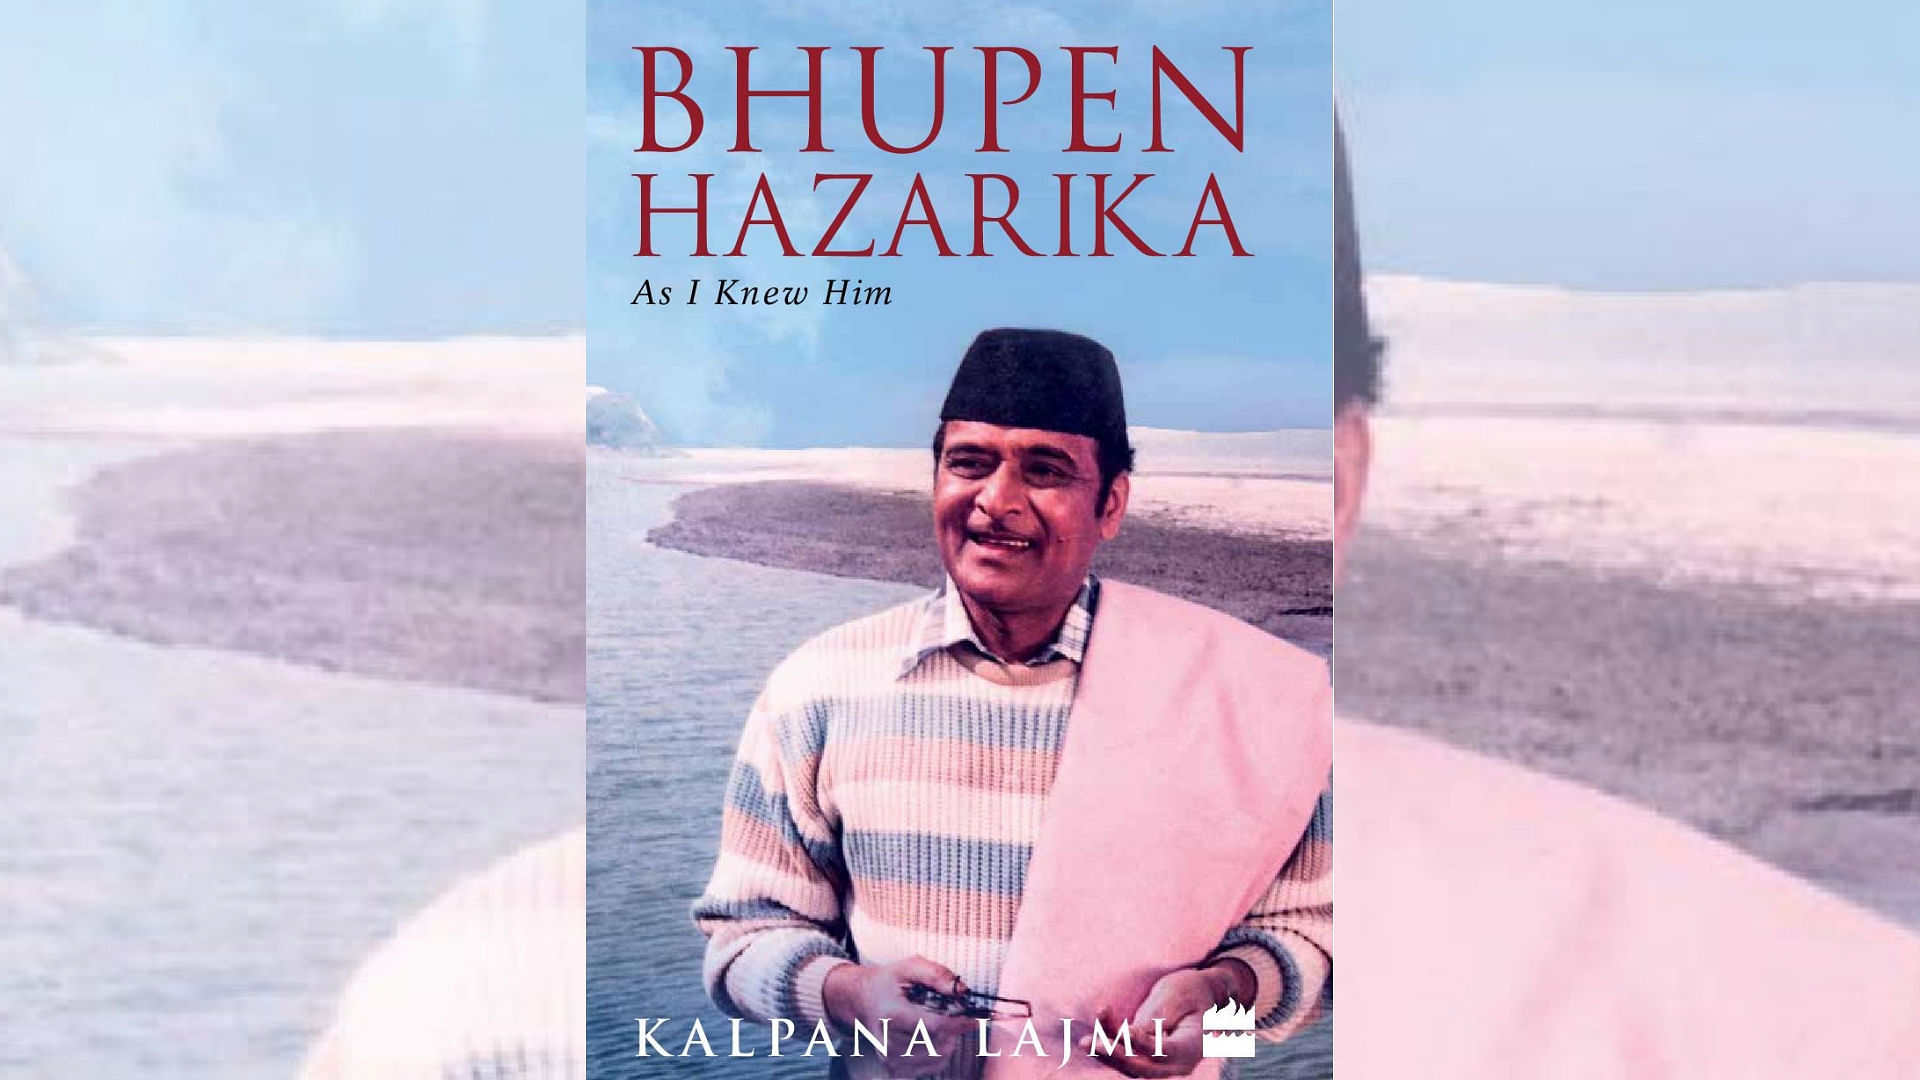 The cover of Kalpana Lajmi’s <i>Bhupen Hazarika: As I Knew Him</i>.